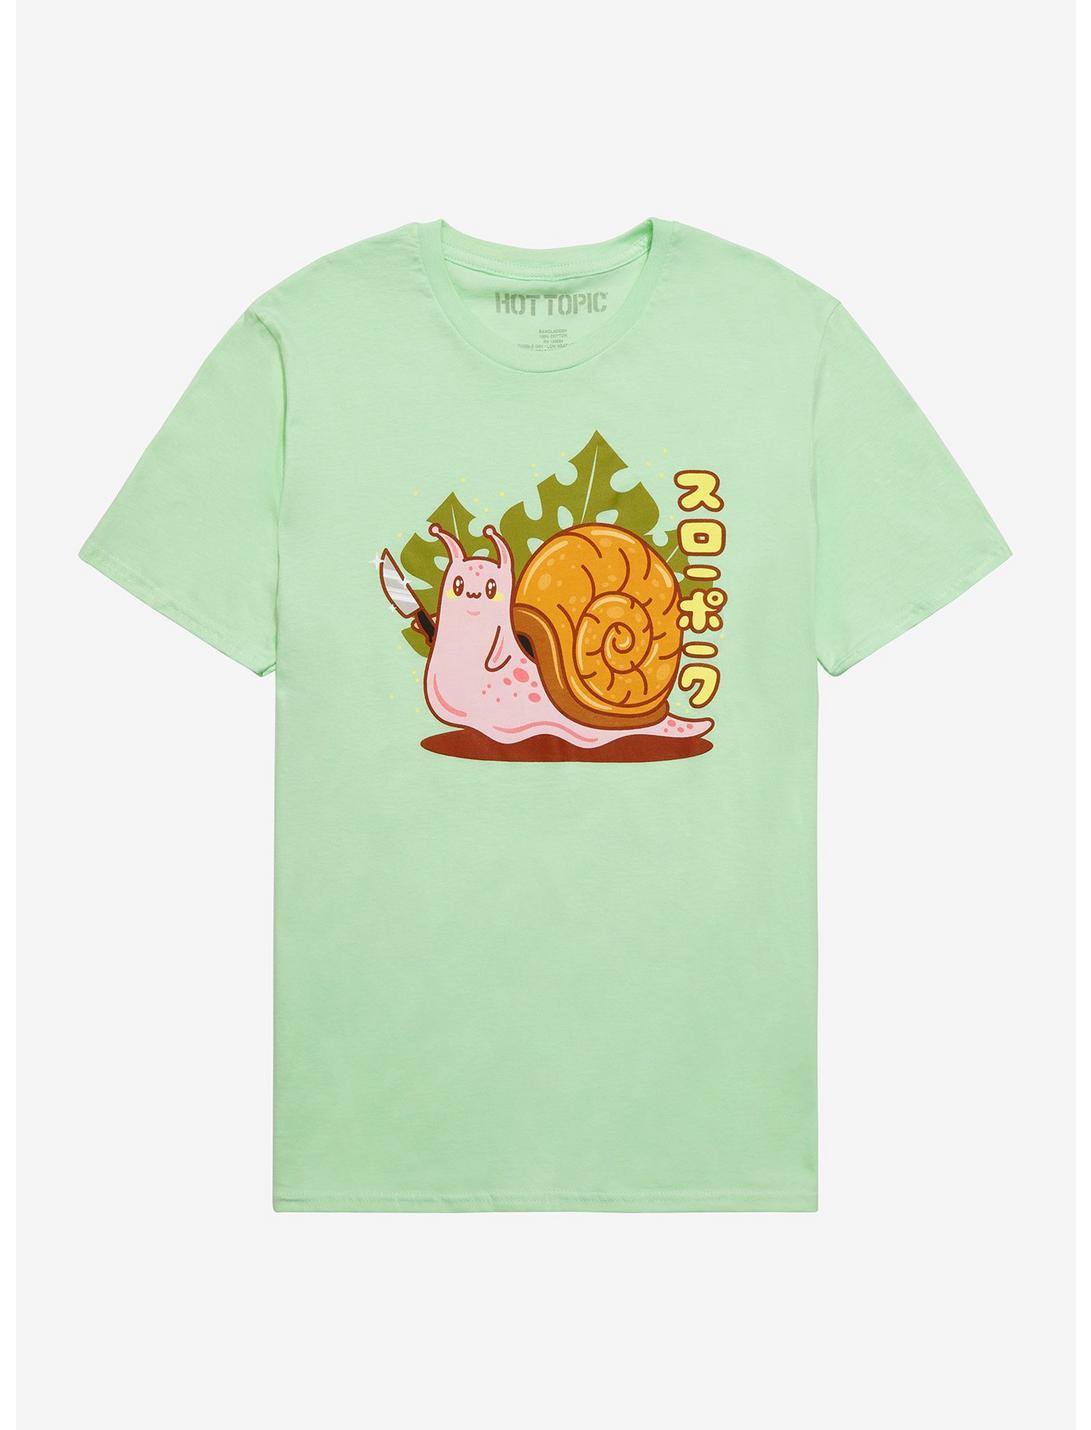 Snail With Knife Boyfriend Fit Girls T-Shirt, MULTI, hi-res